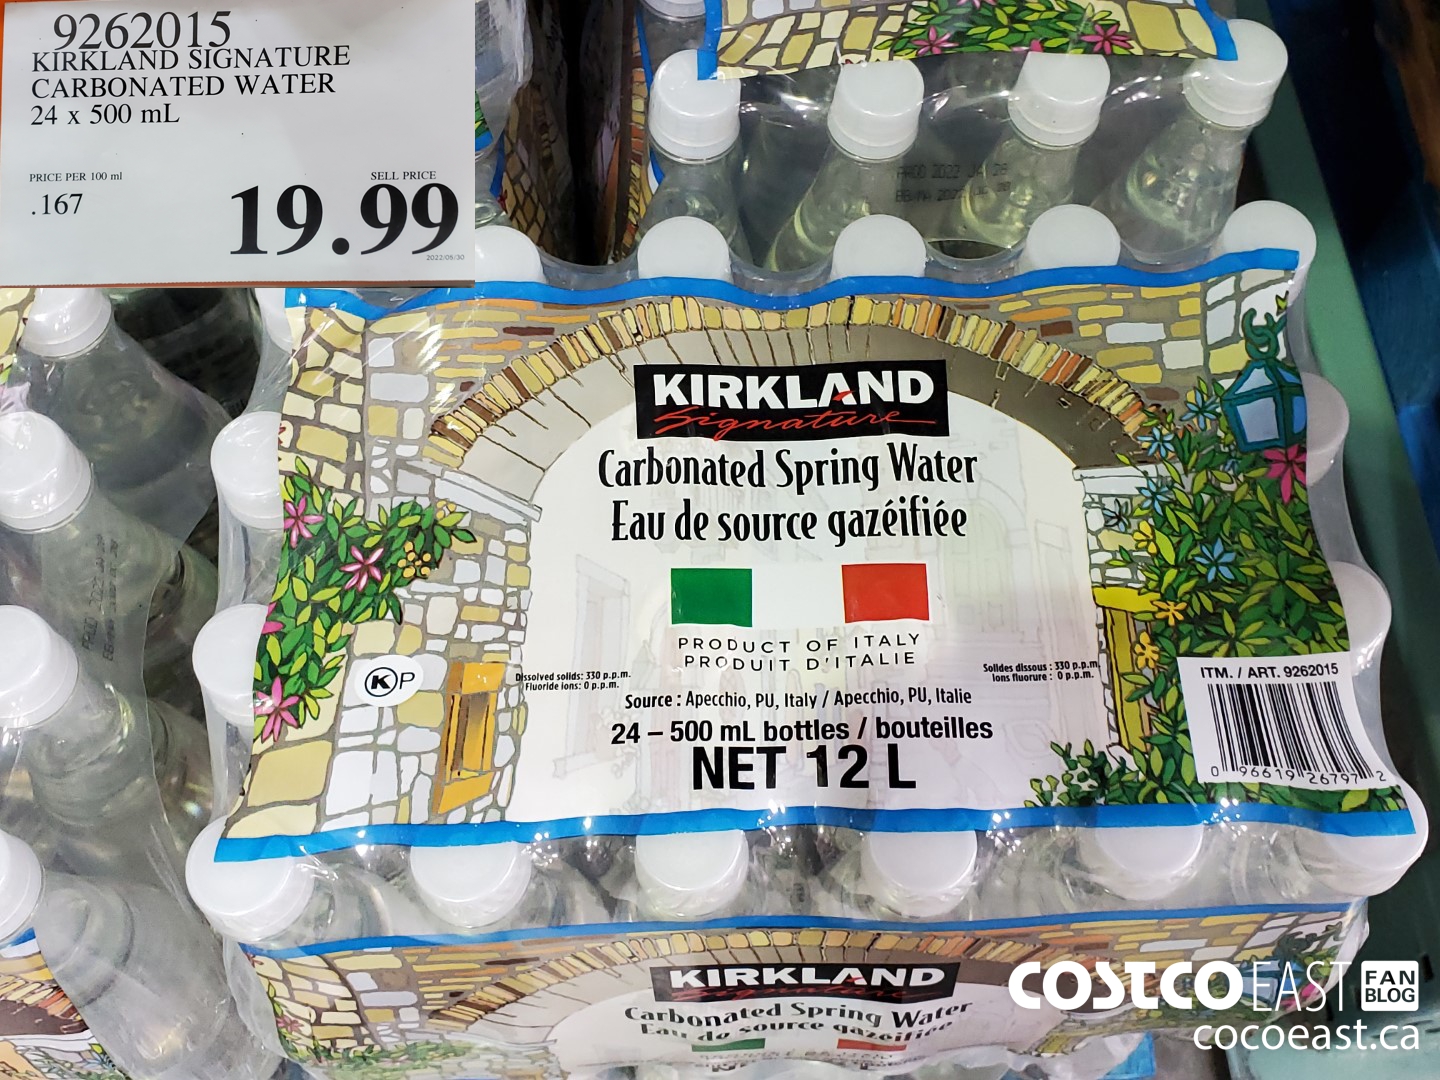 Kirkland Signature Carbonated Spring Water, 24 x 500 mL